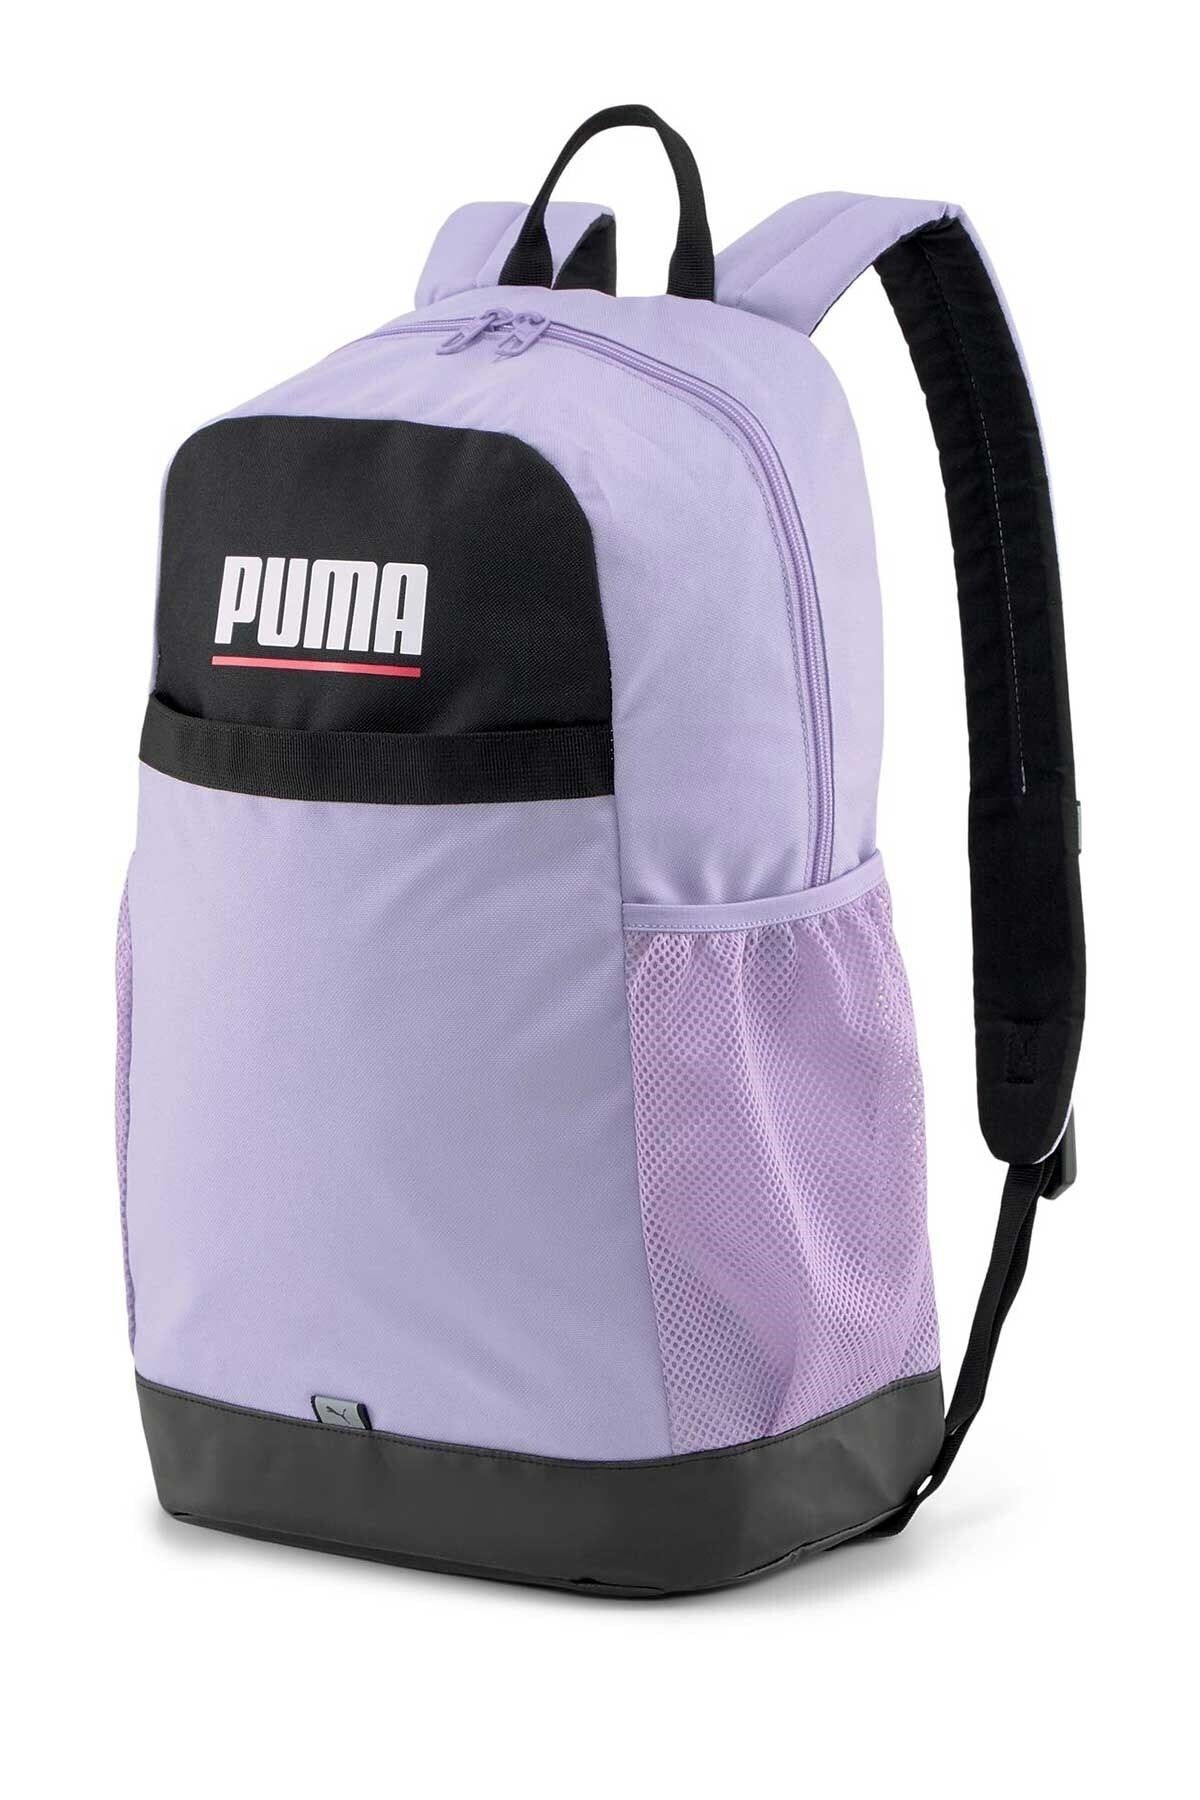 Puma Plus Unisex Sırt Çantası 07961503